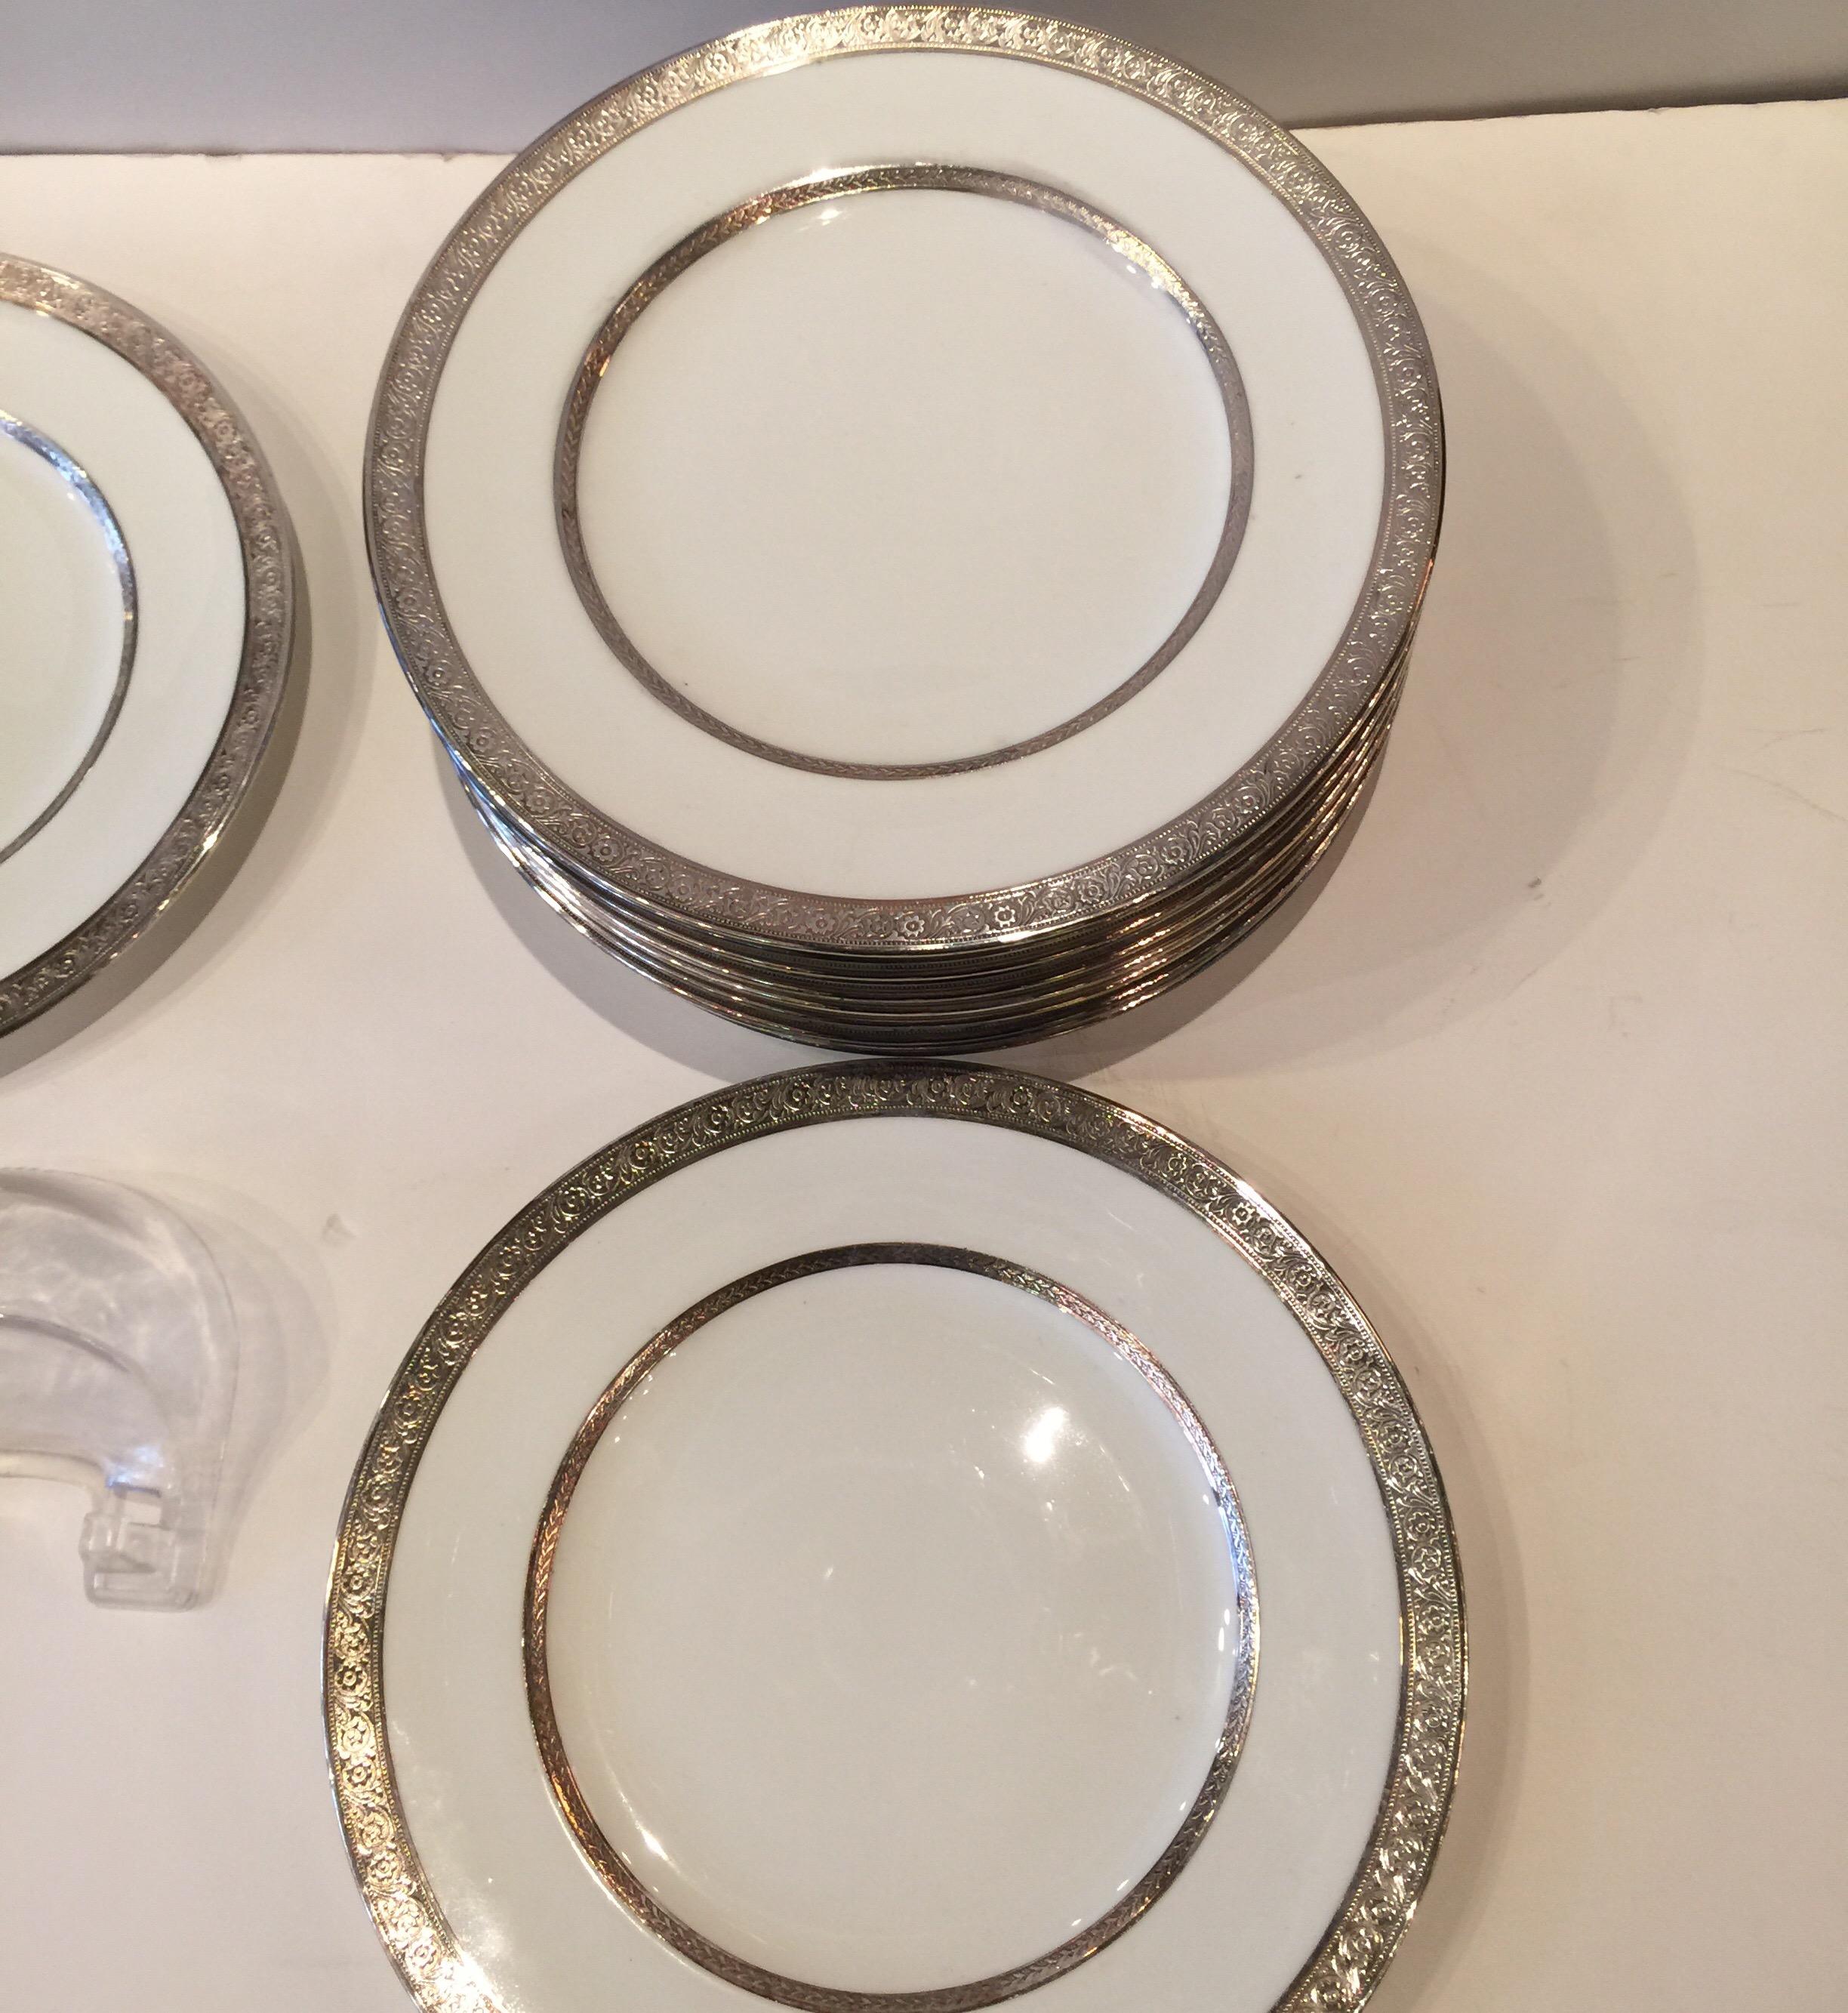 Set of Twelve Sterling Silver Overlay Dinner/Service Plates, England 1